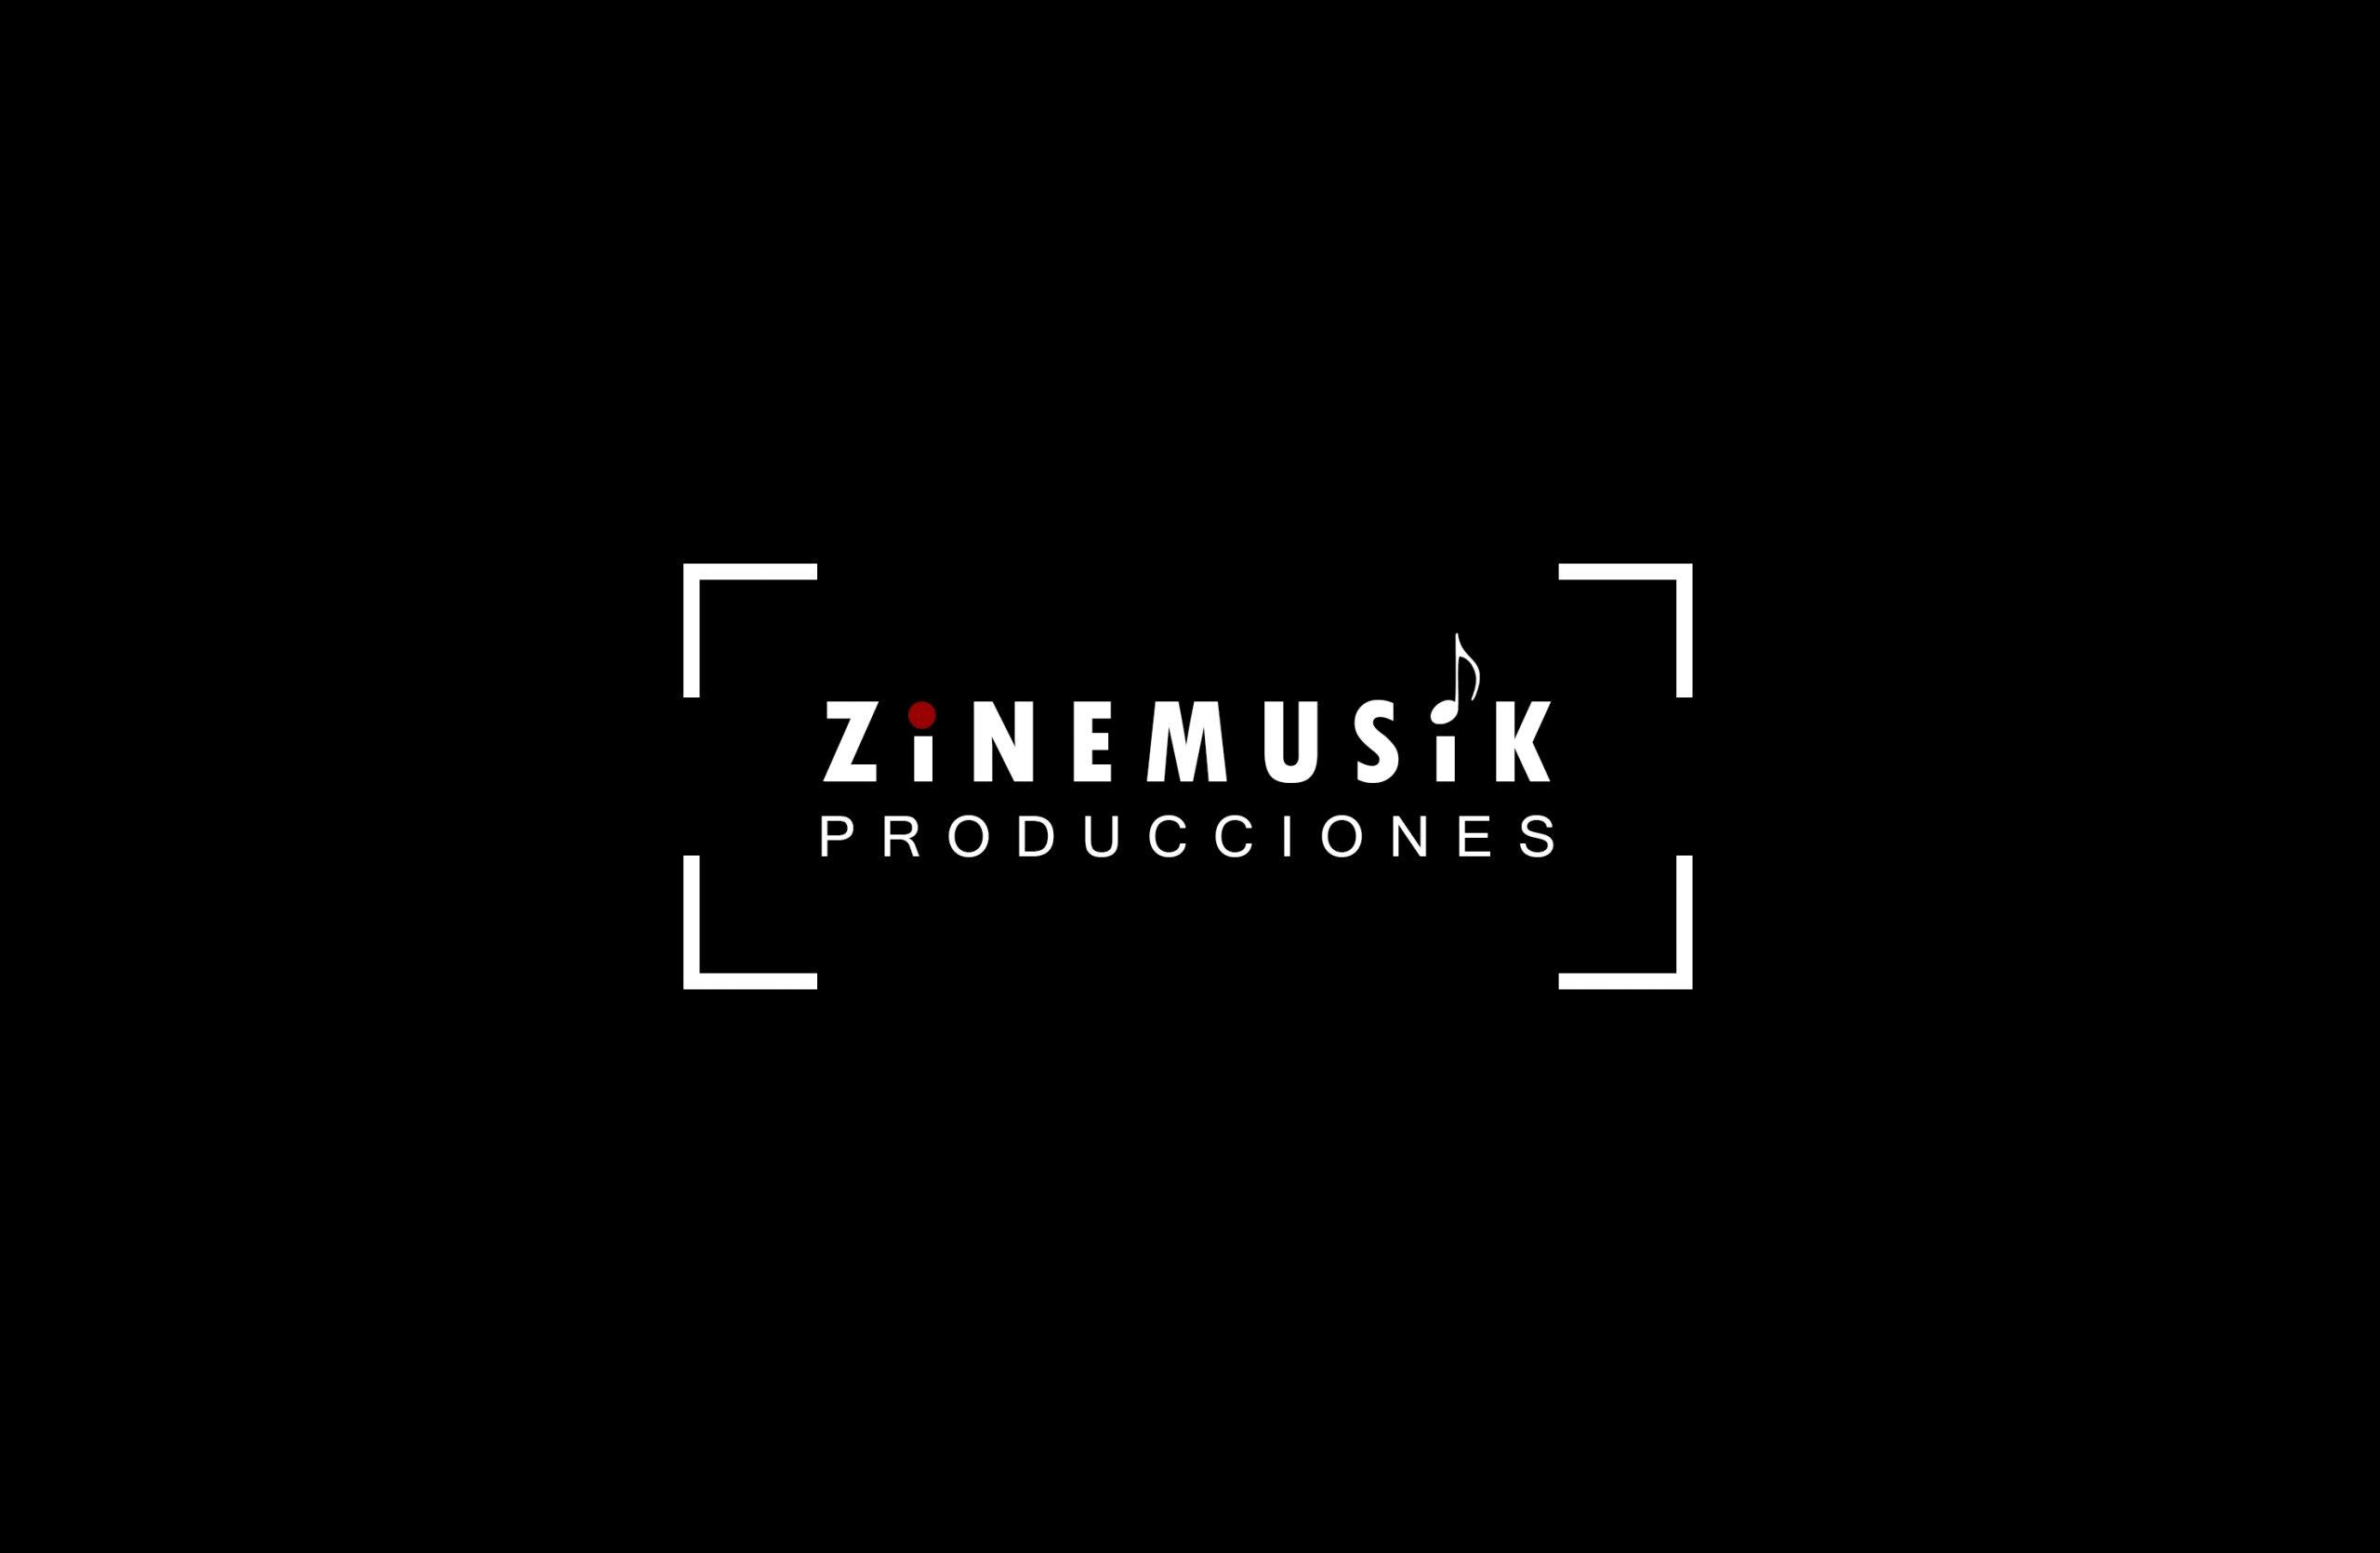 (c) Zinemusik.com